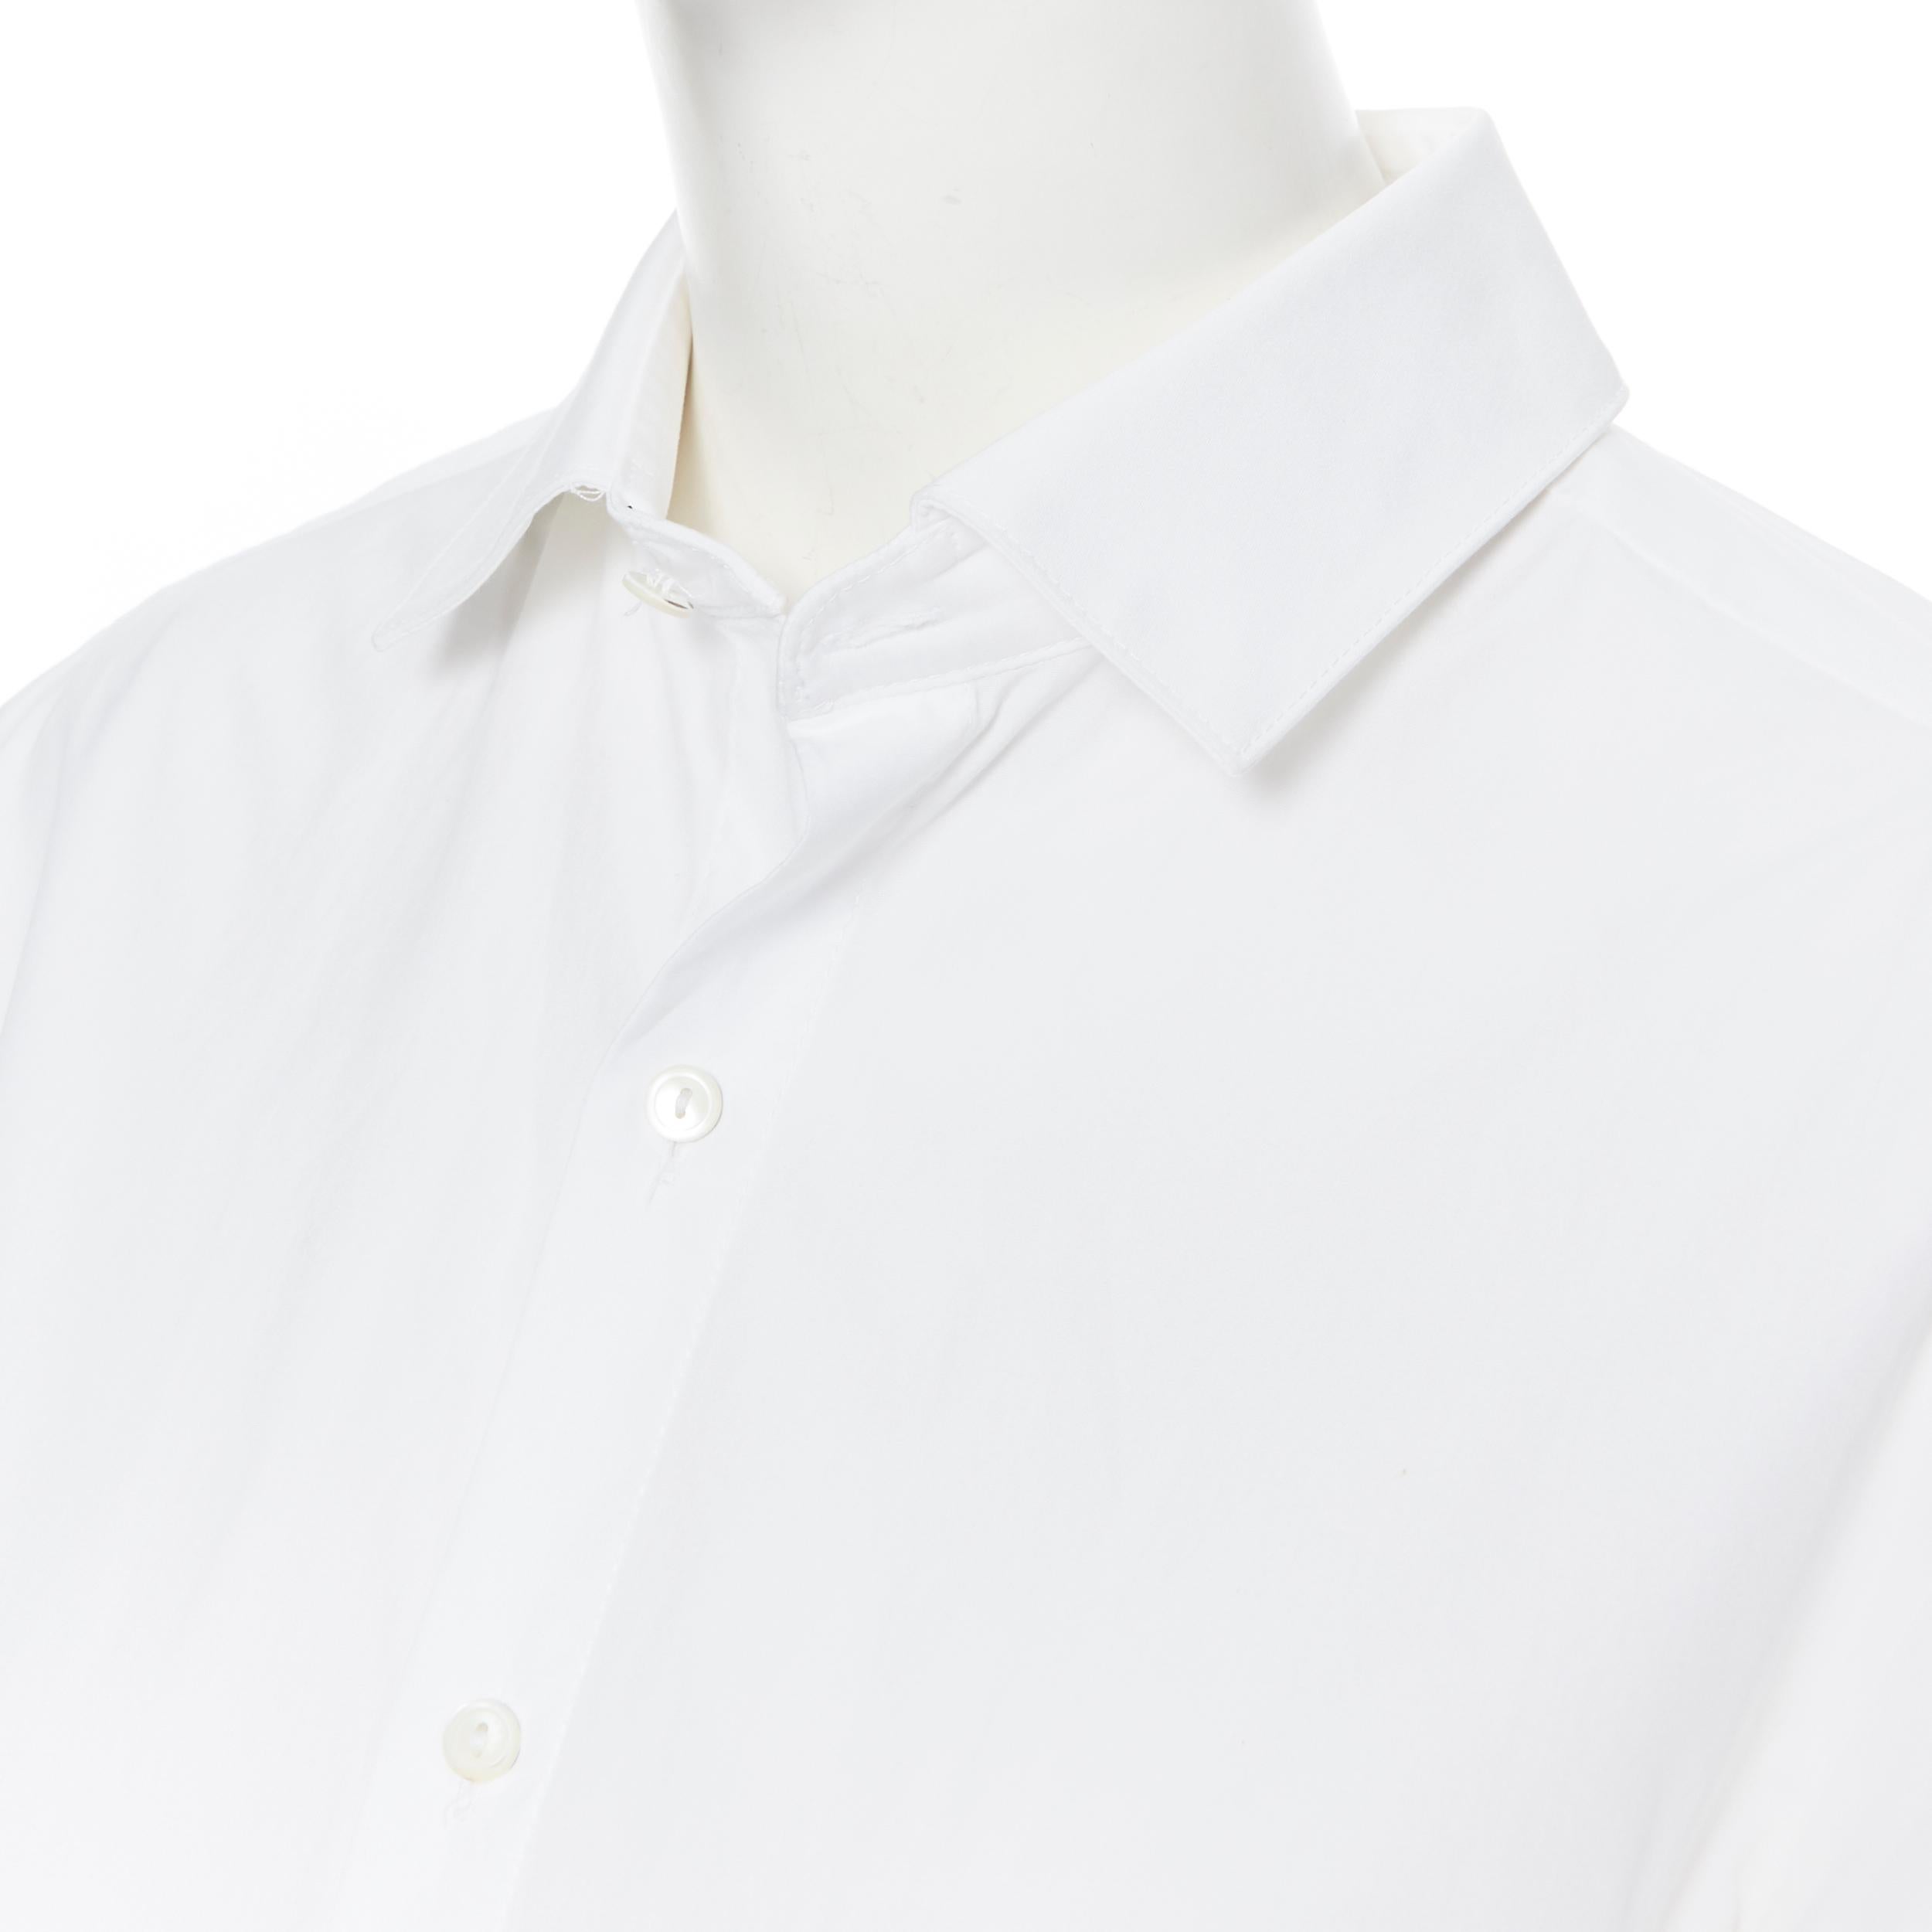 PALMER HARDING white cotton elongated cuff curvec hem oversized shirt UK8 3